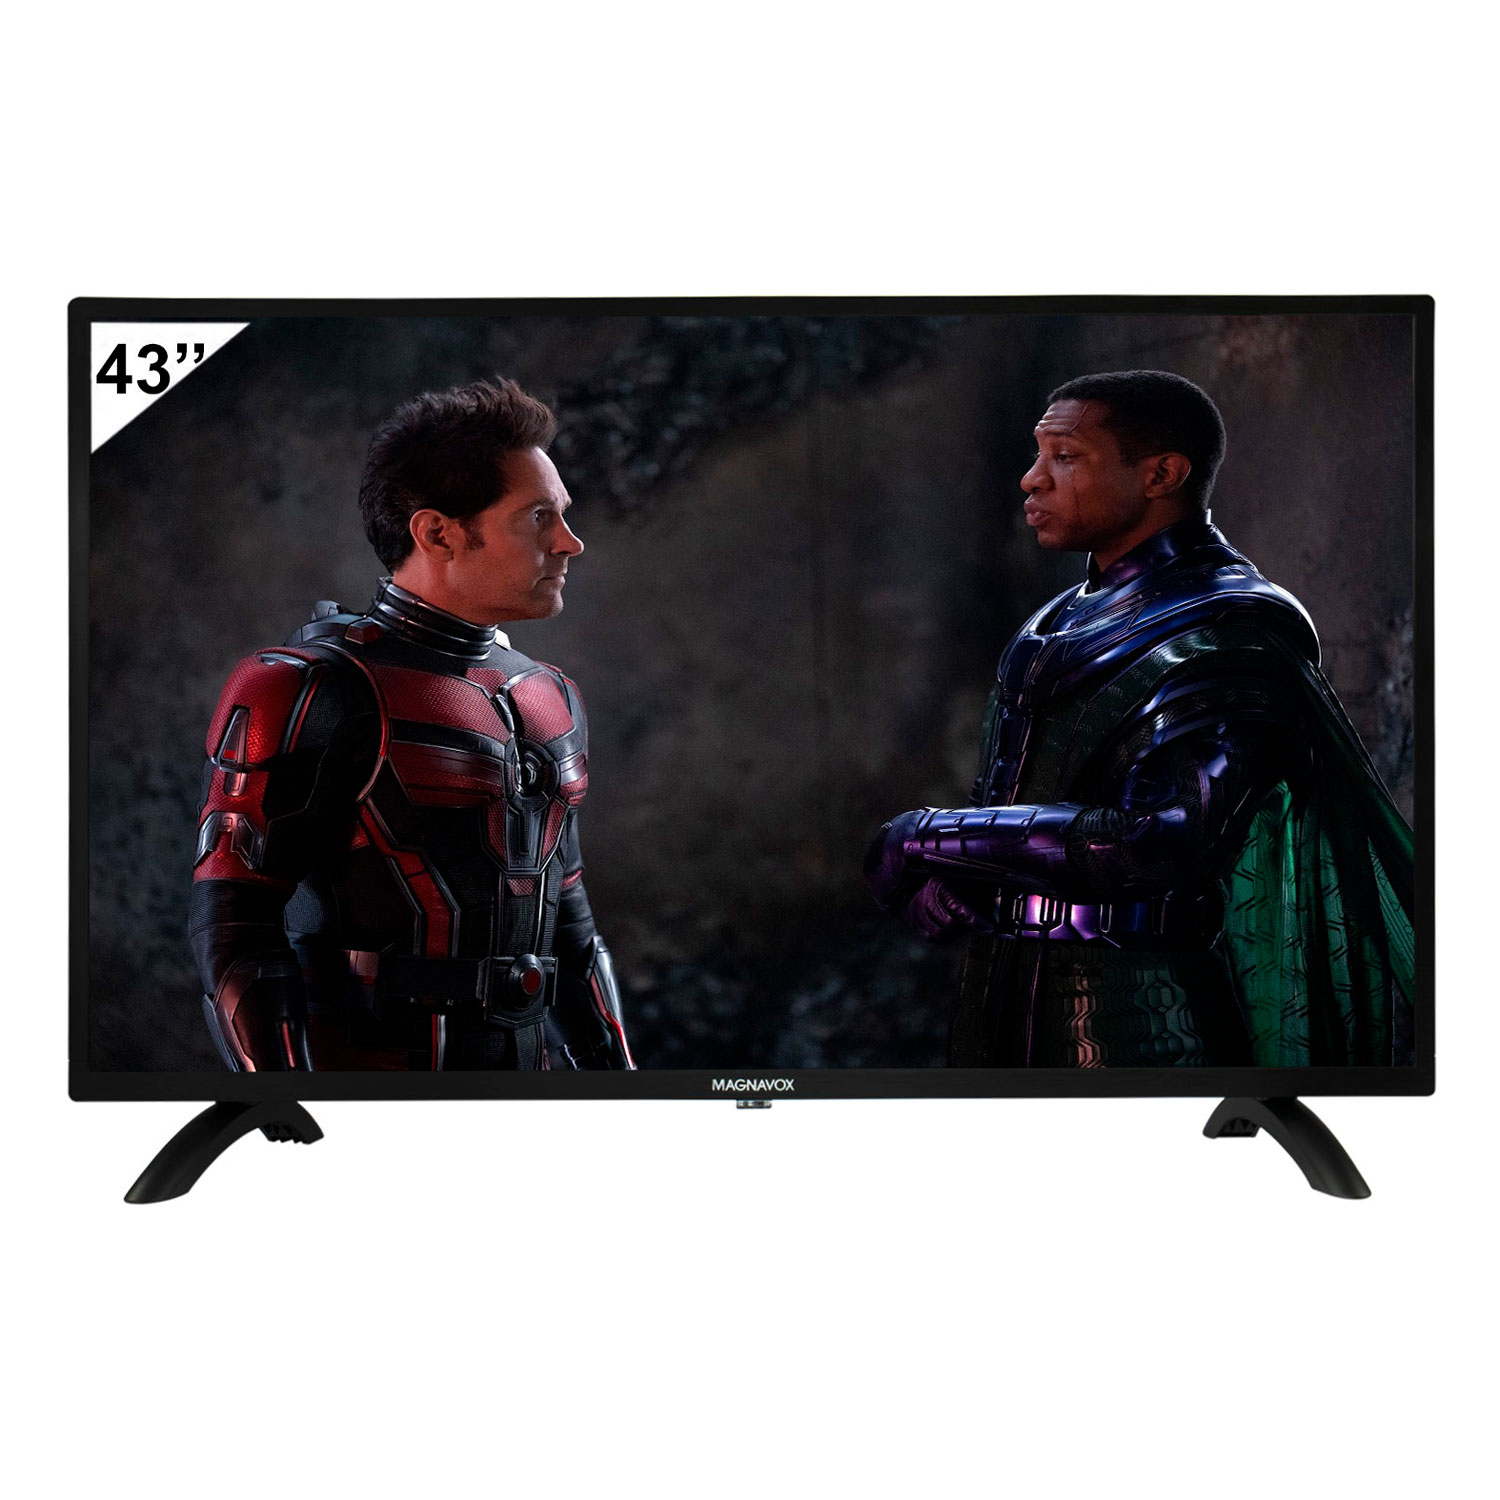 Smart TV LED Magnavox 43MEZ442-M1 43"  Full HD / HDMI / USB